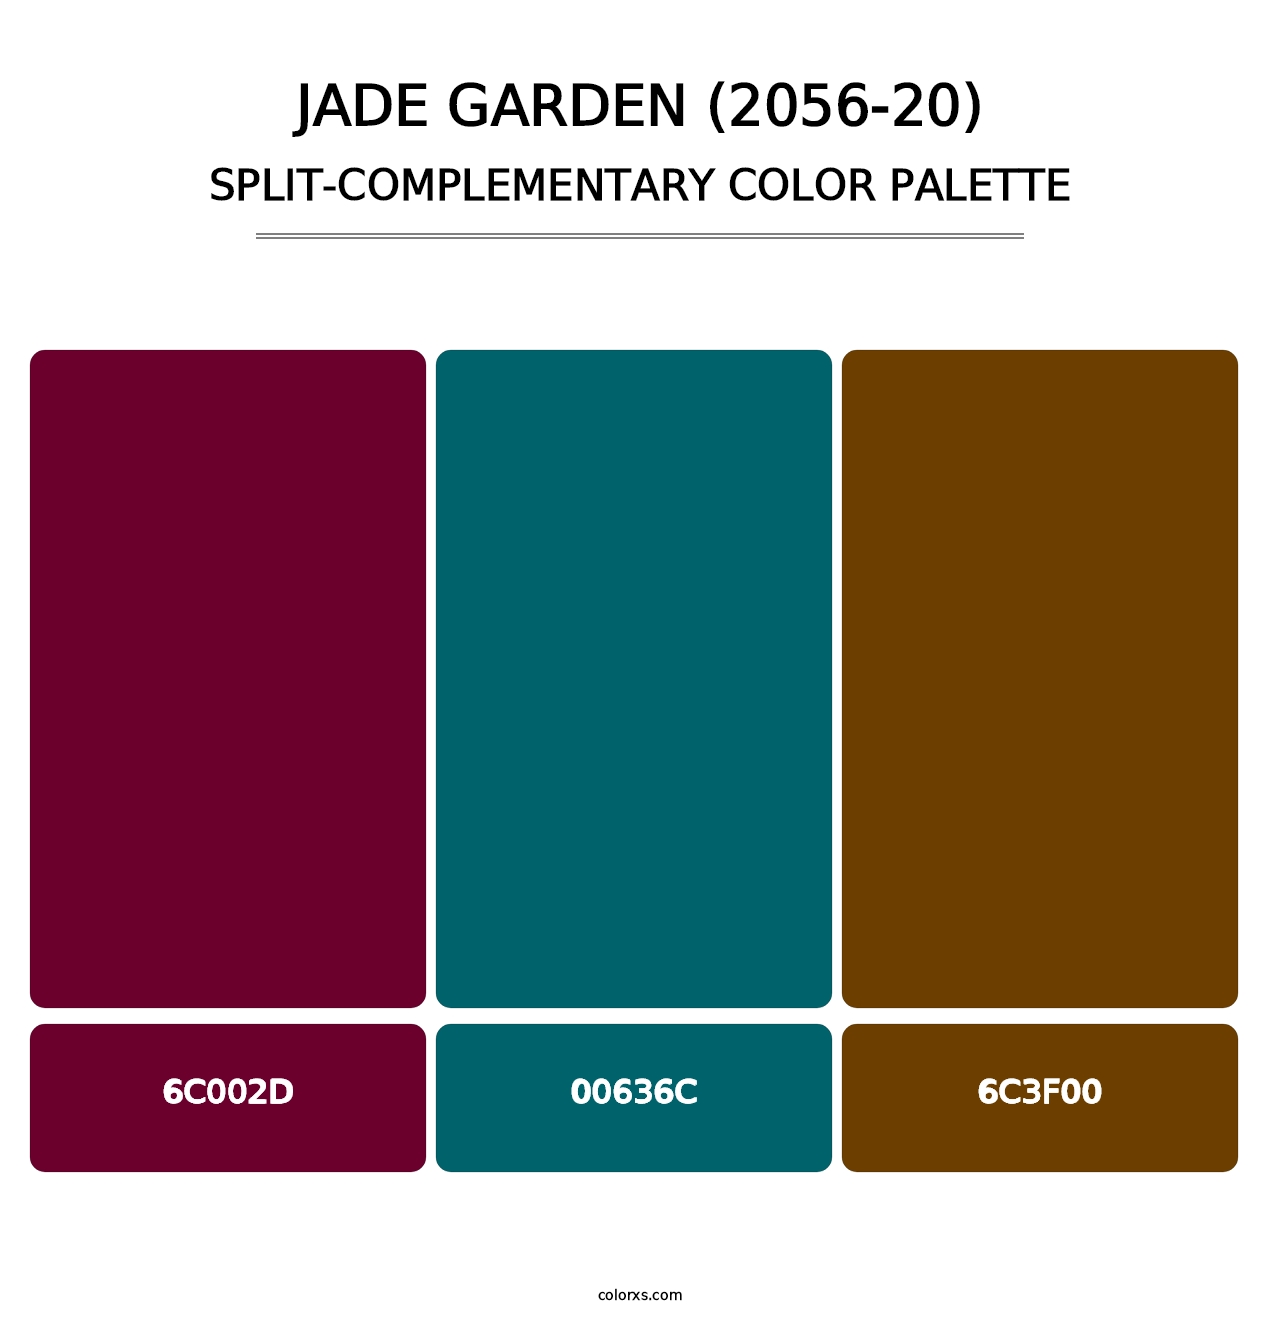 Jade Garden (2056-20) - Split-Complementary Color Palette